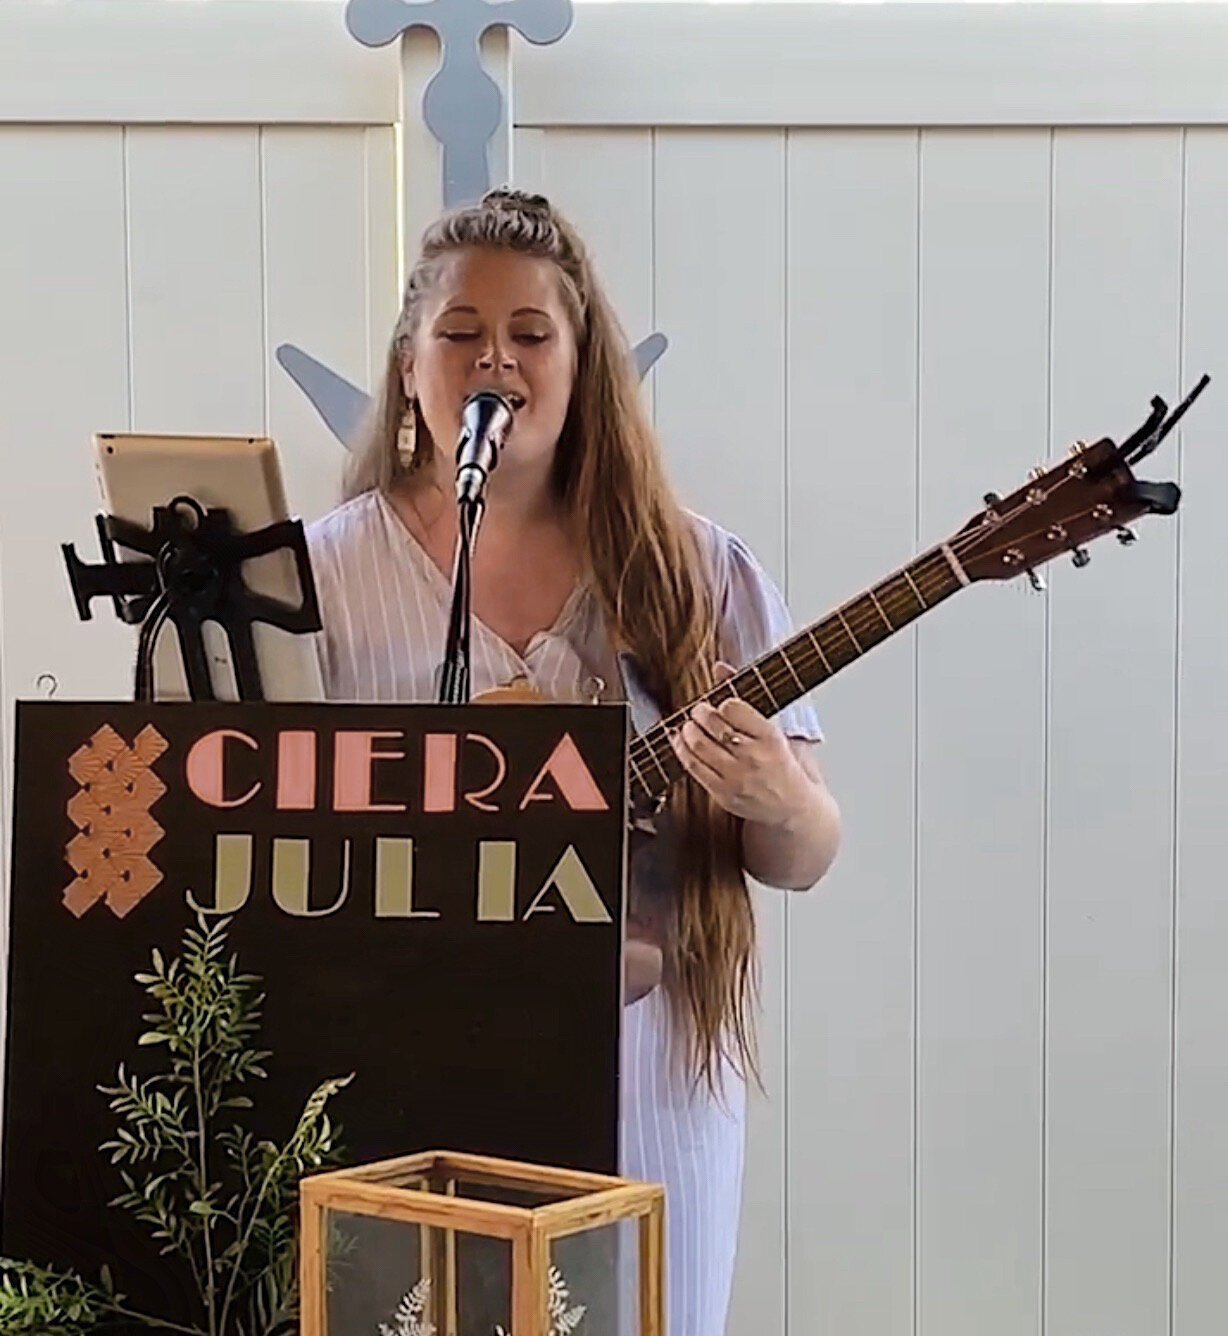 Ciera Julia performing at Tonio’s Seafood Shack.